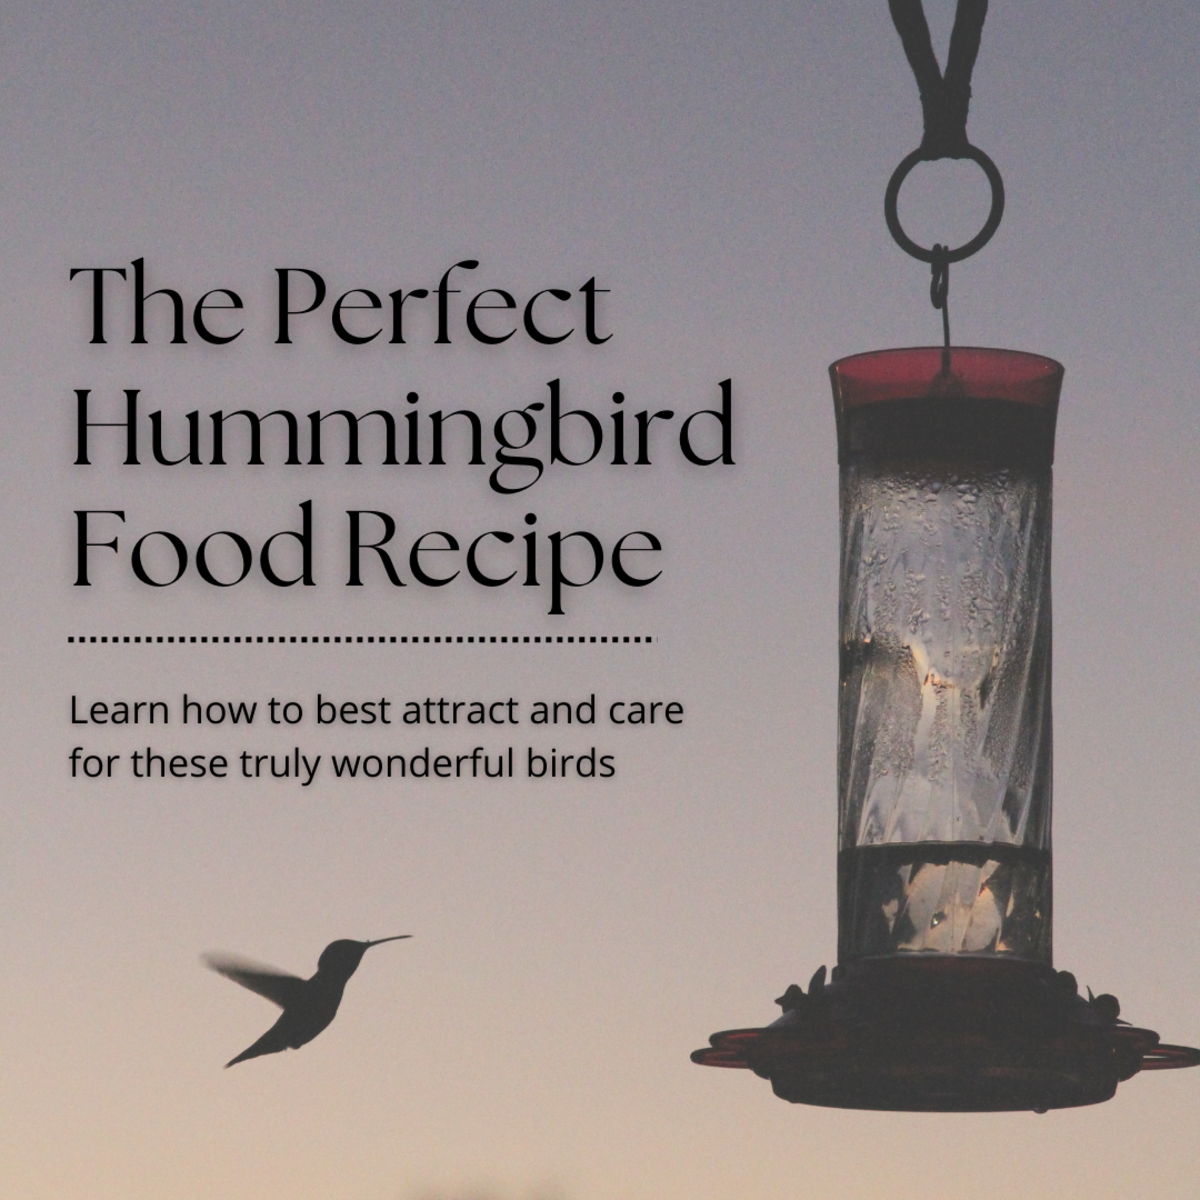 The Perfect Hummingbird Food Recipe